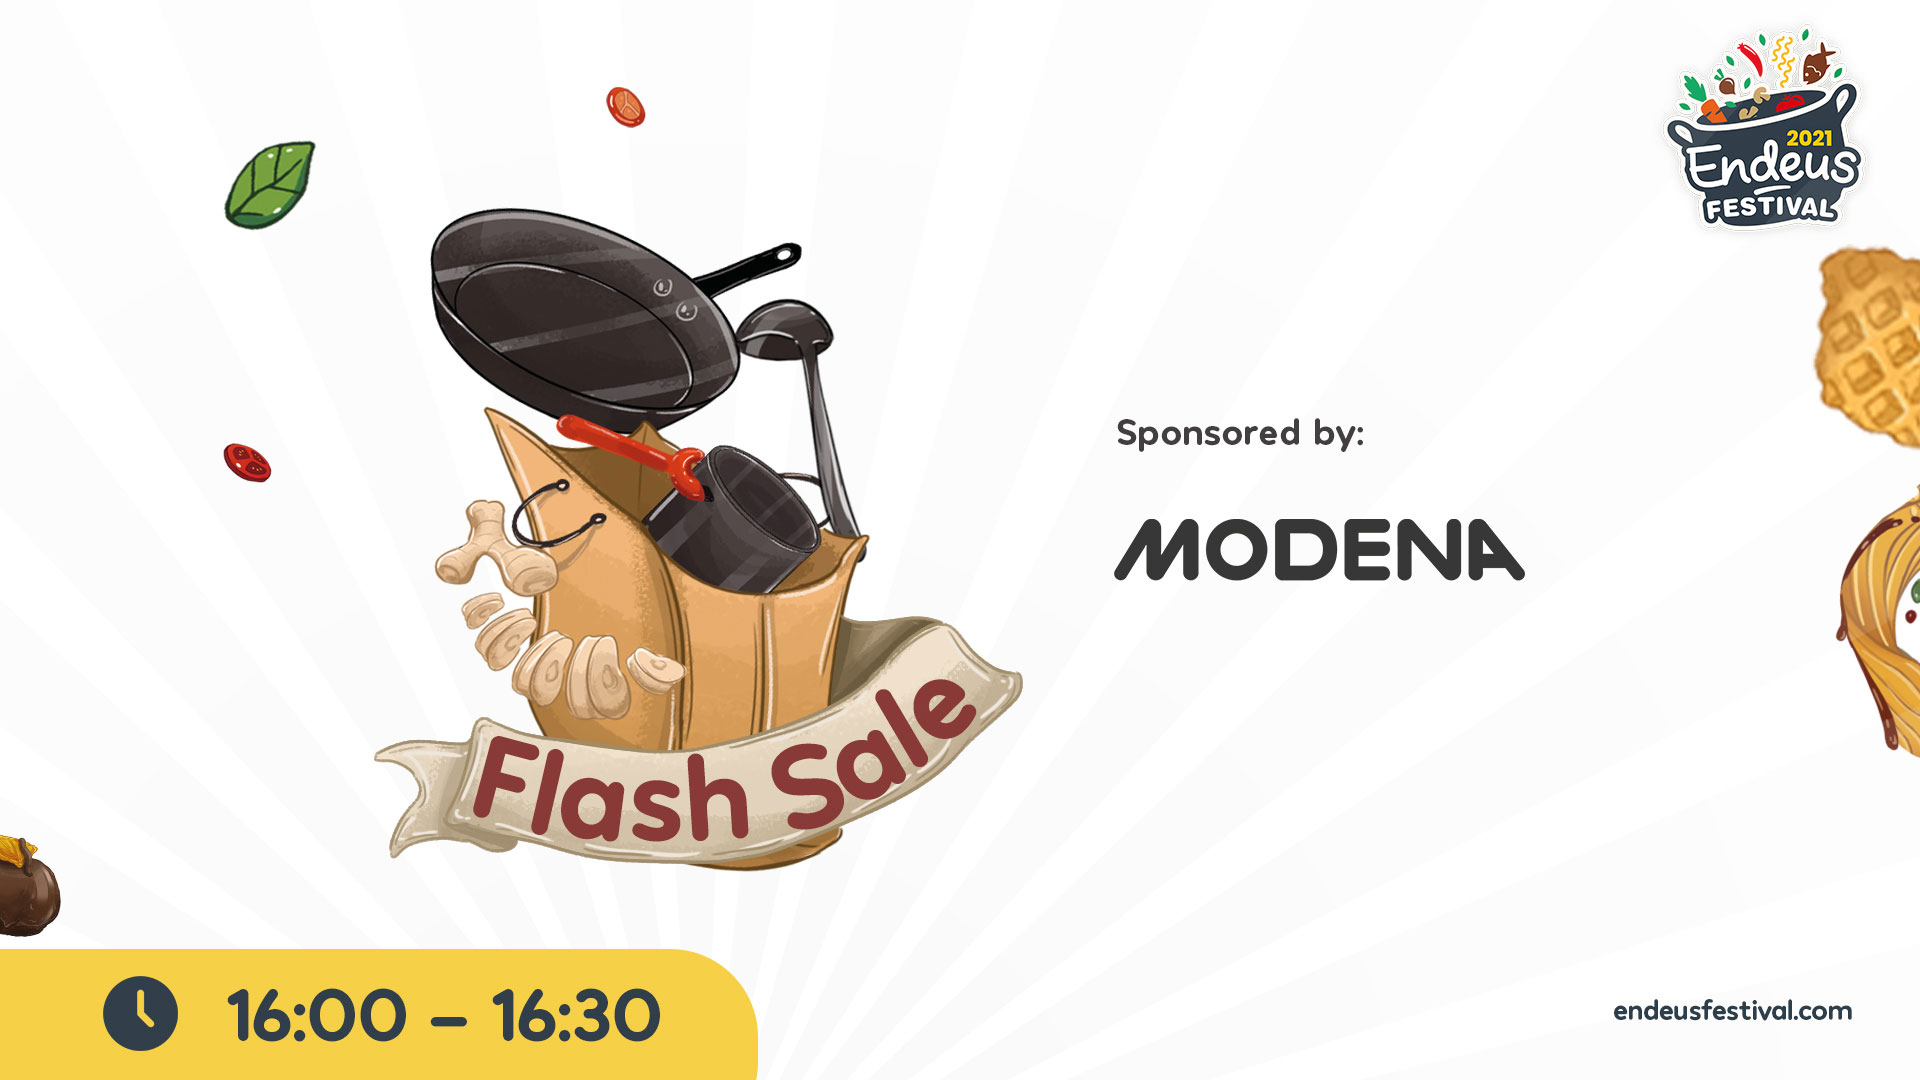 Flash Sale Sponsored by MODENA